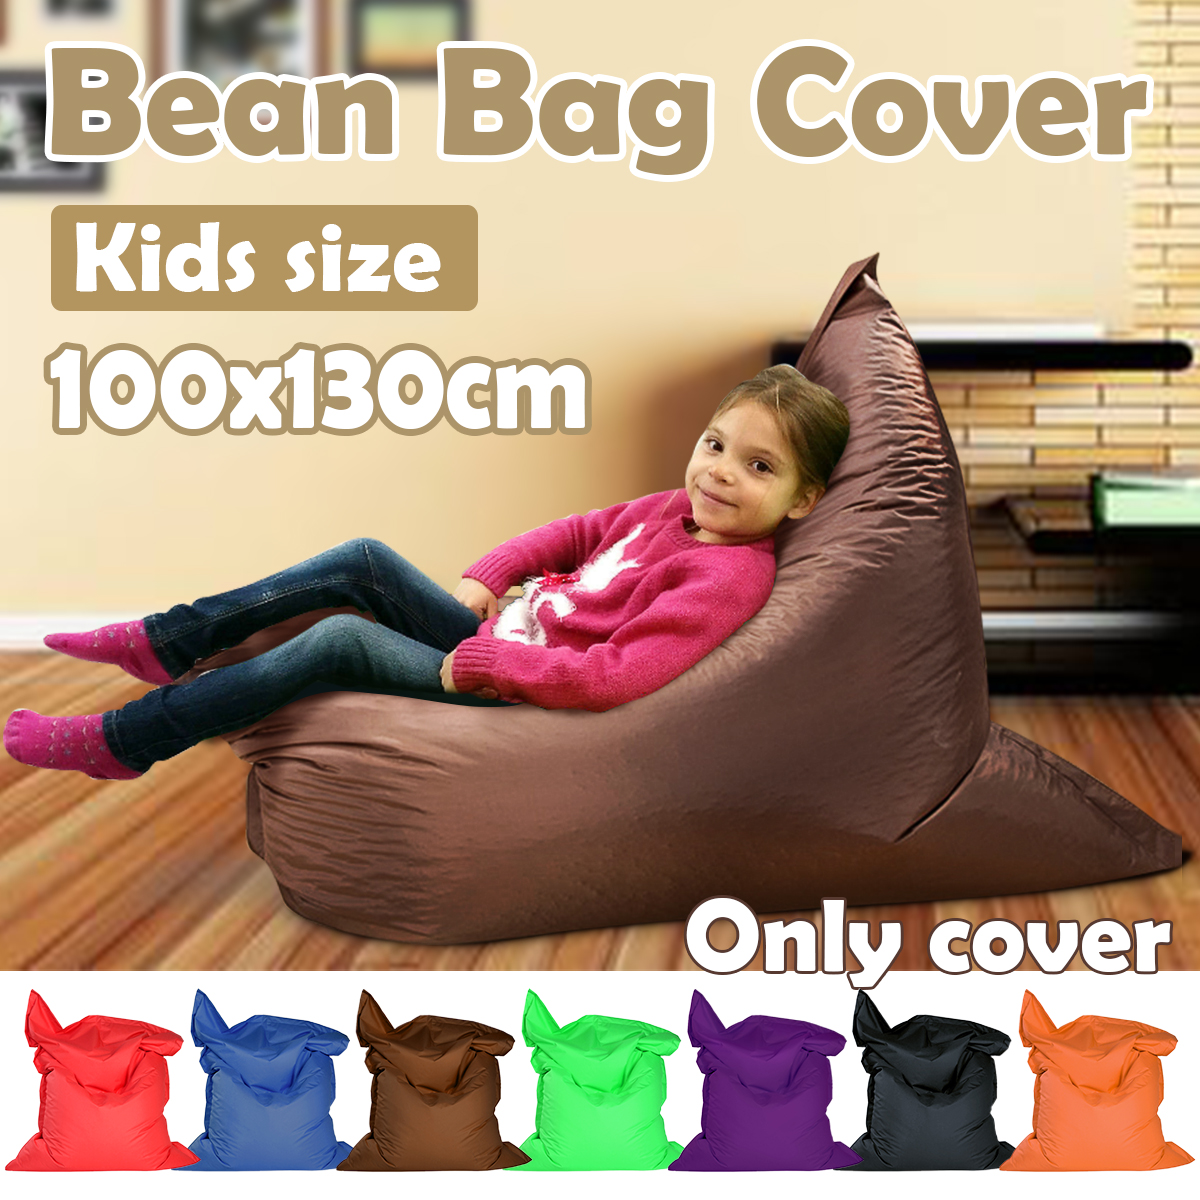 100130CM-Oxford-Giant-Large-Kids-Bean-Bag-Cover-Indoor-Outdoor-Beanbag-Garden-Waterproof-Cushion-1647604-1